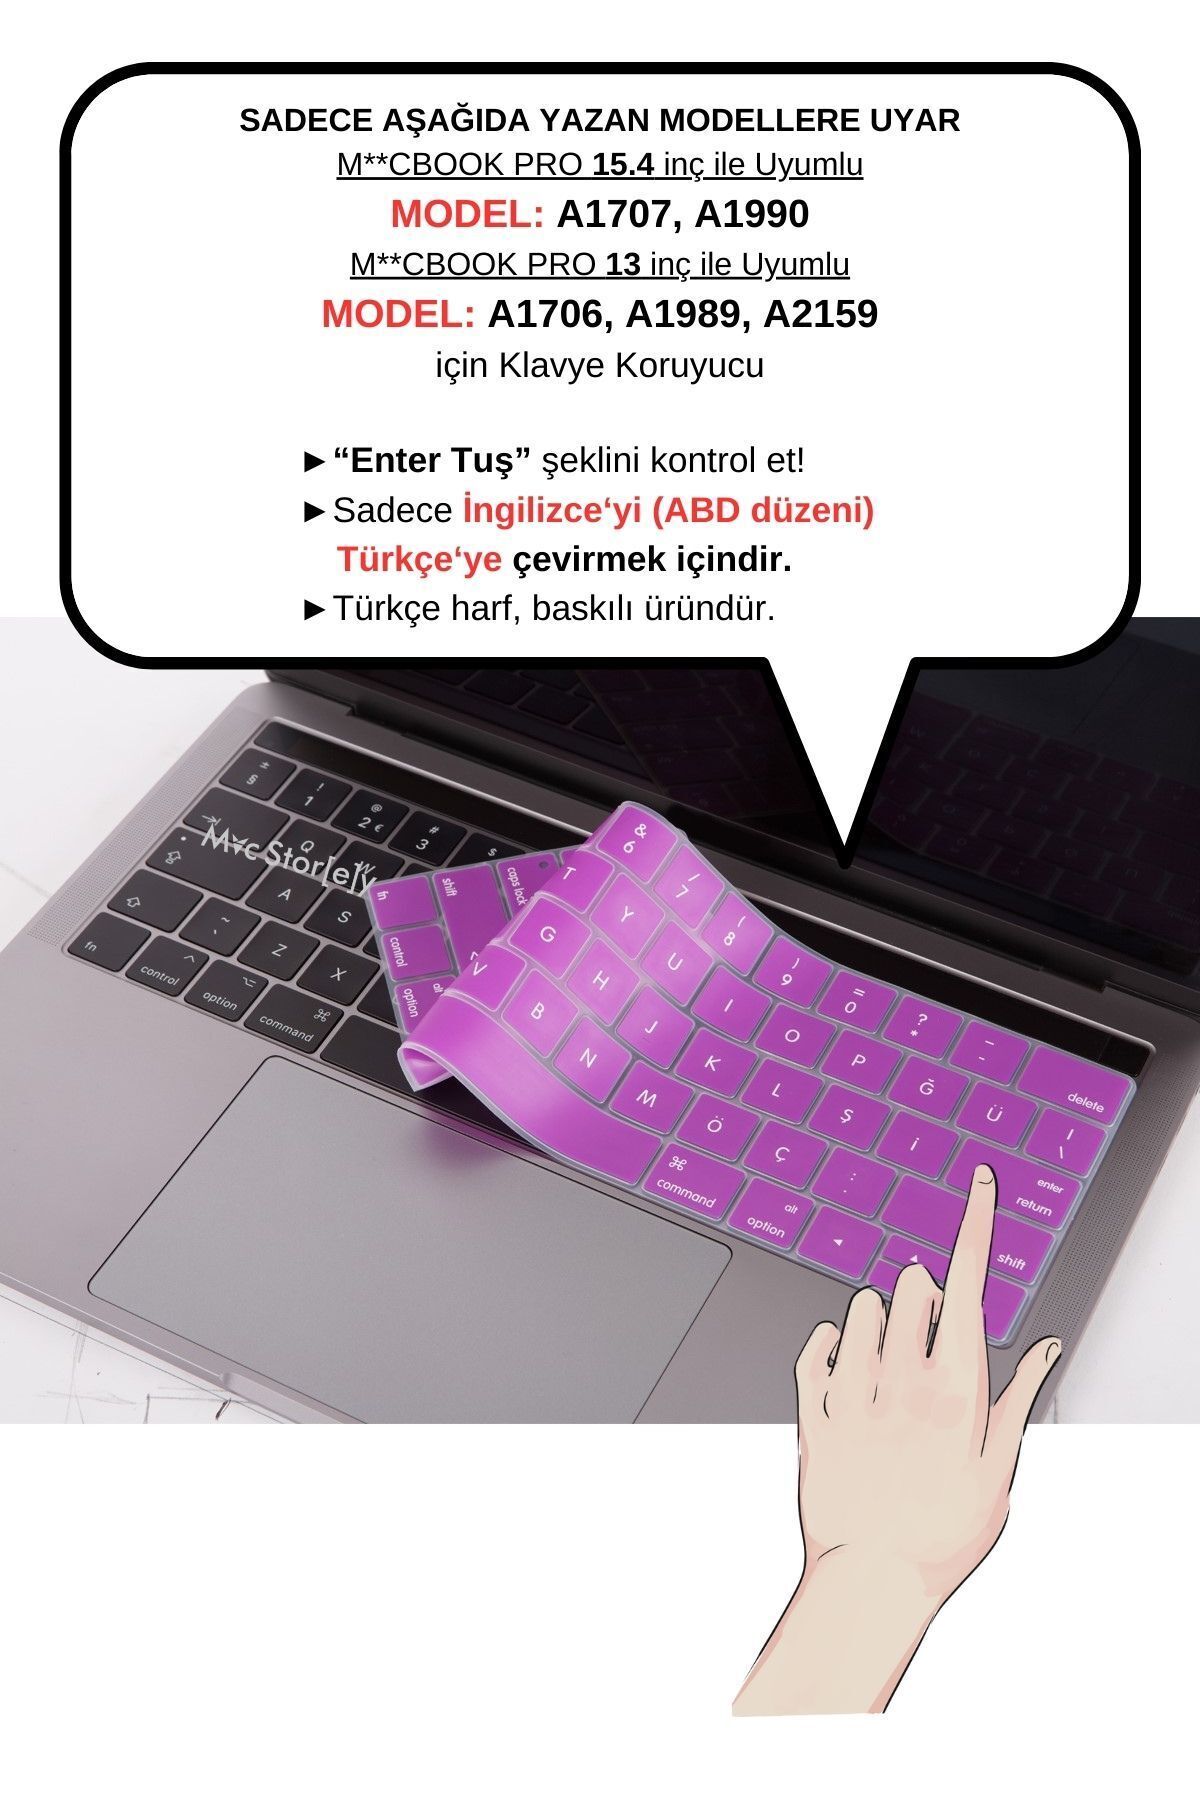 Mcstorey Macbook Pro Klavye Koruyucu (US TO TR) 13inç A1706 A1989 A2159 / 15inç A1707 A1990 Ile Uyumlu